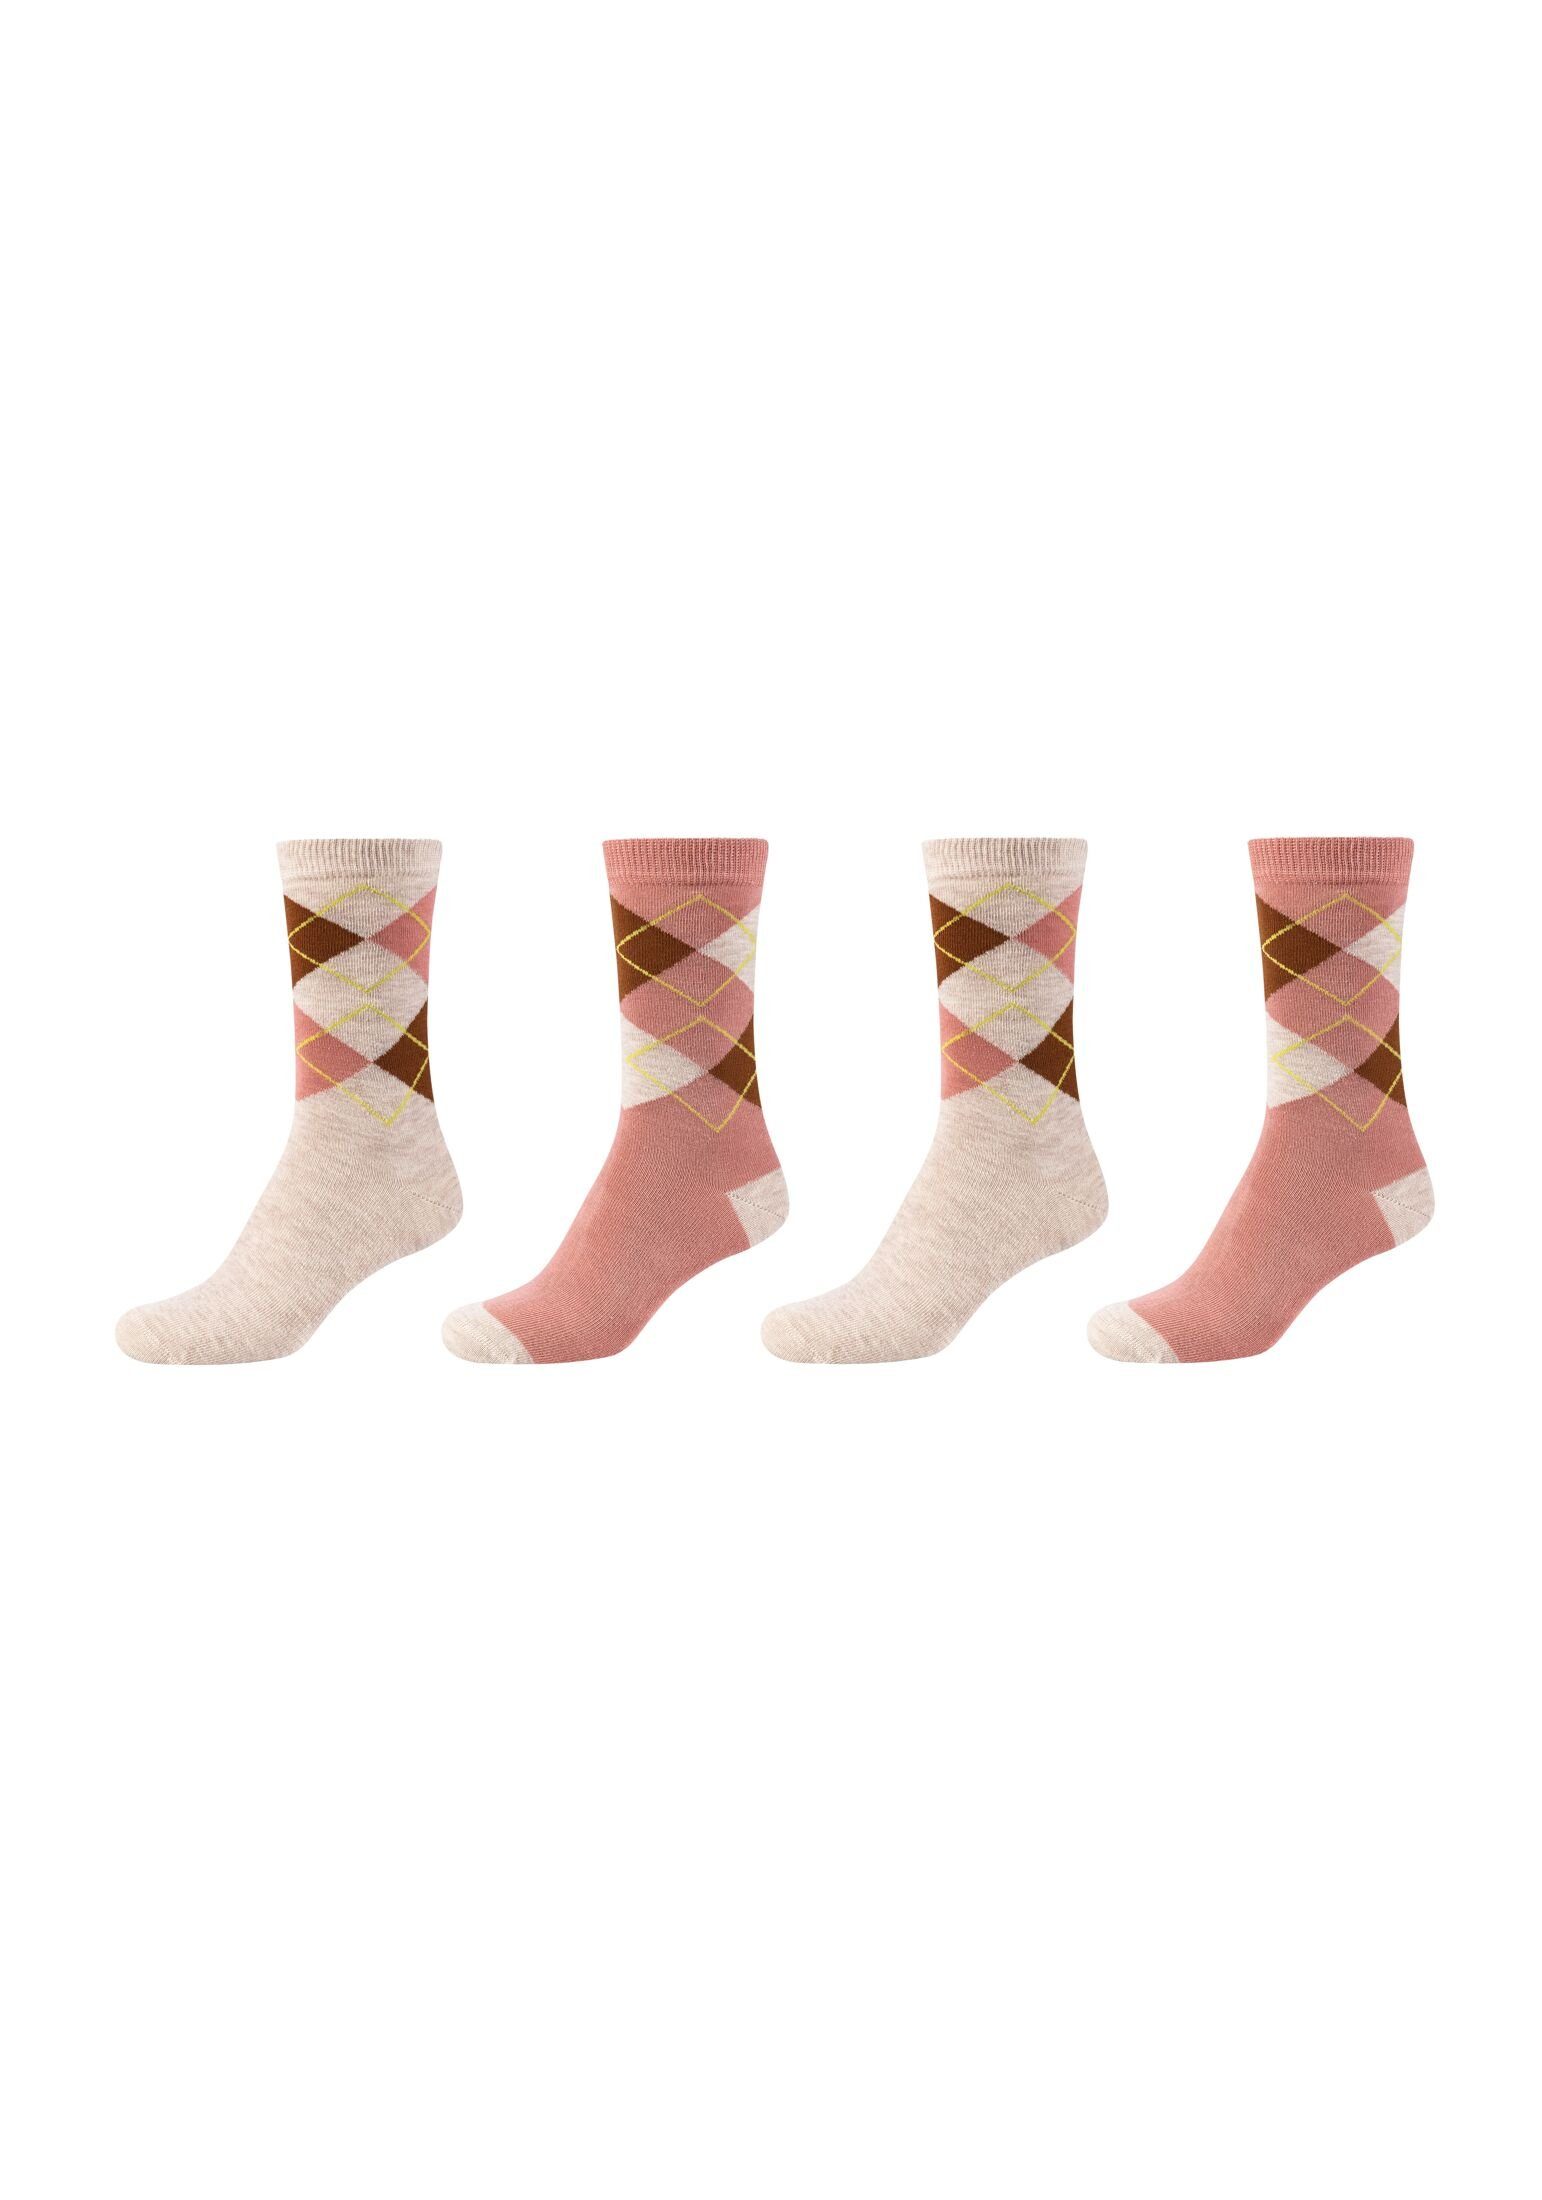 4er rose Socken Socken canyon Pack s.Oliver